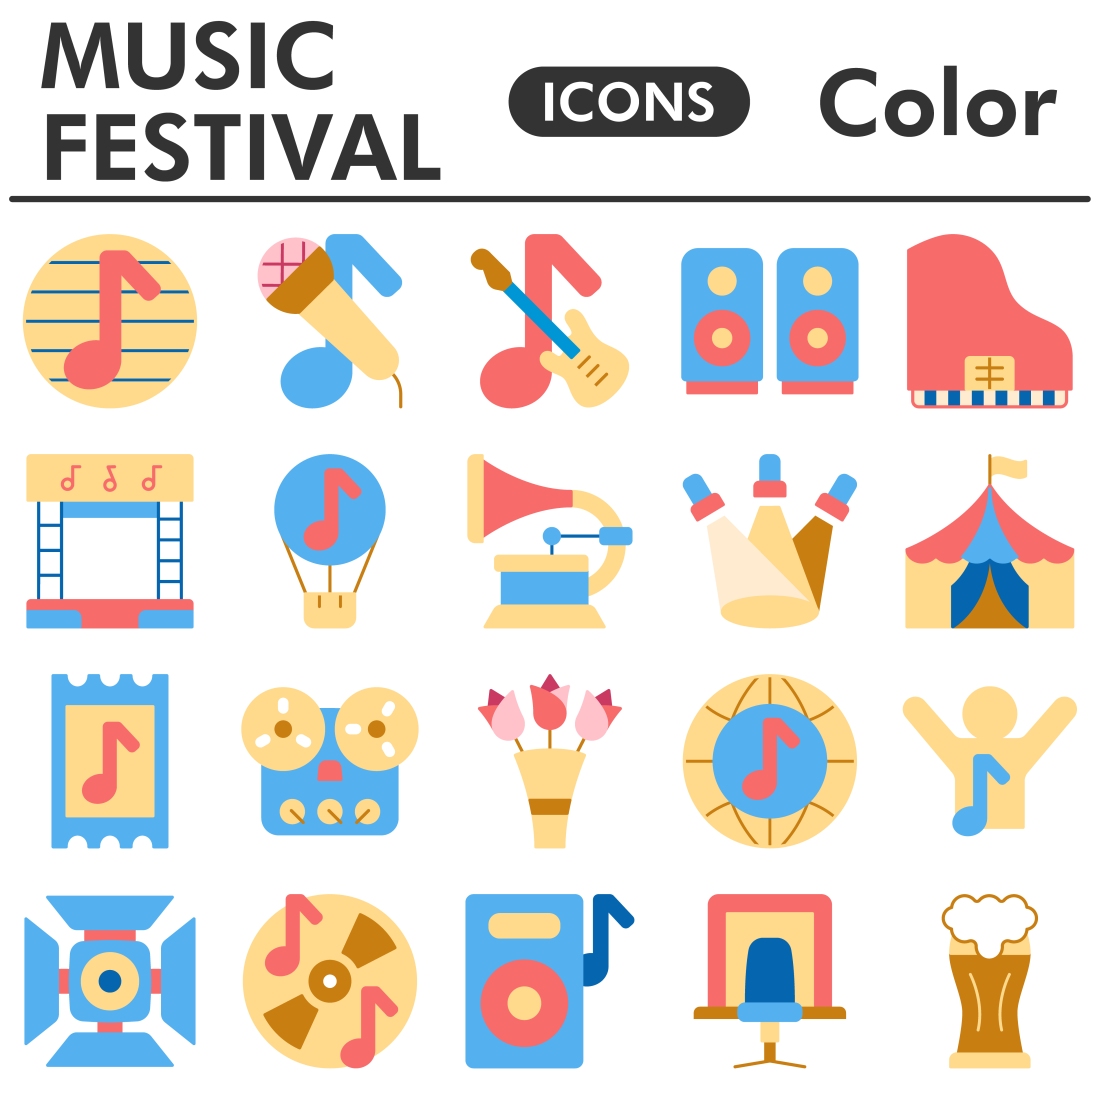 Muzic festival icons set, color style preview image.